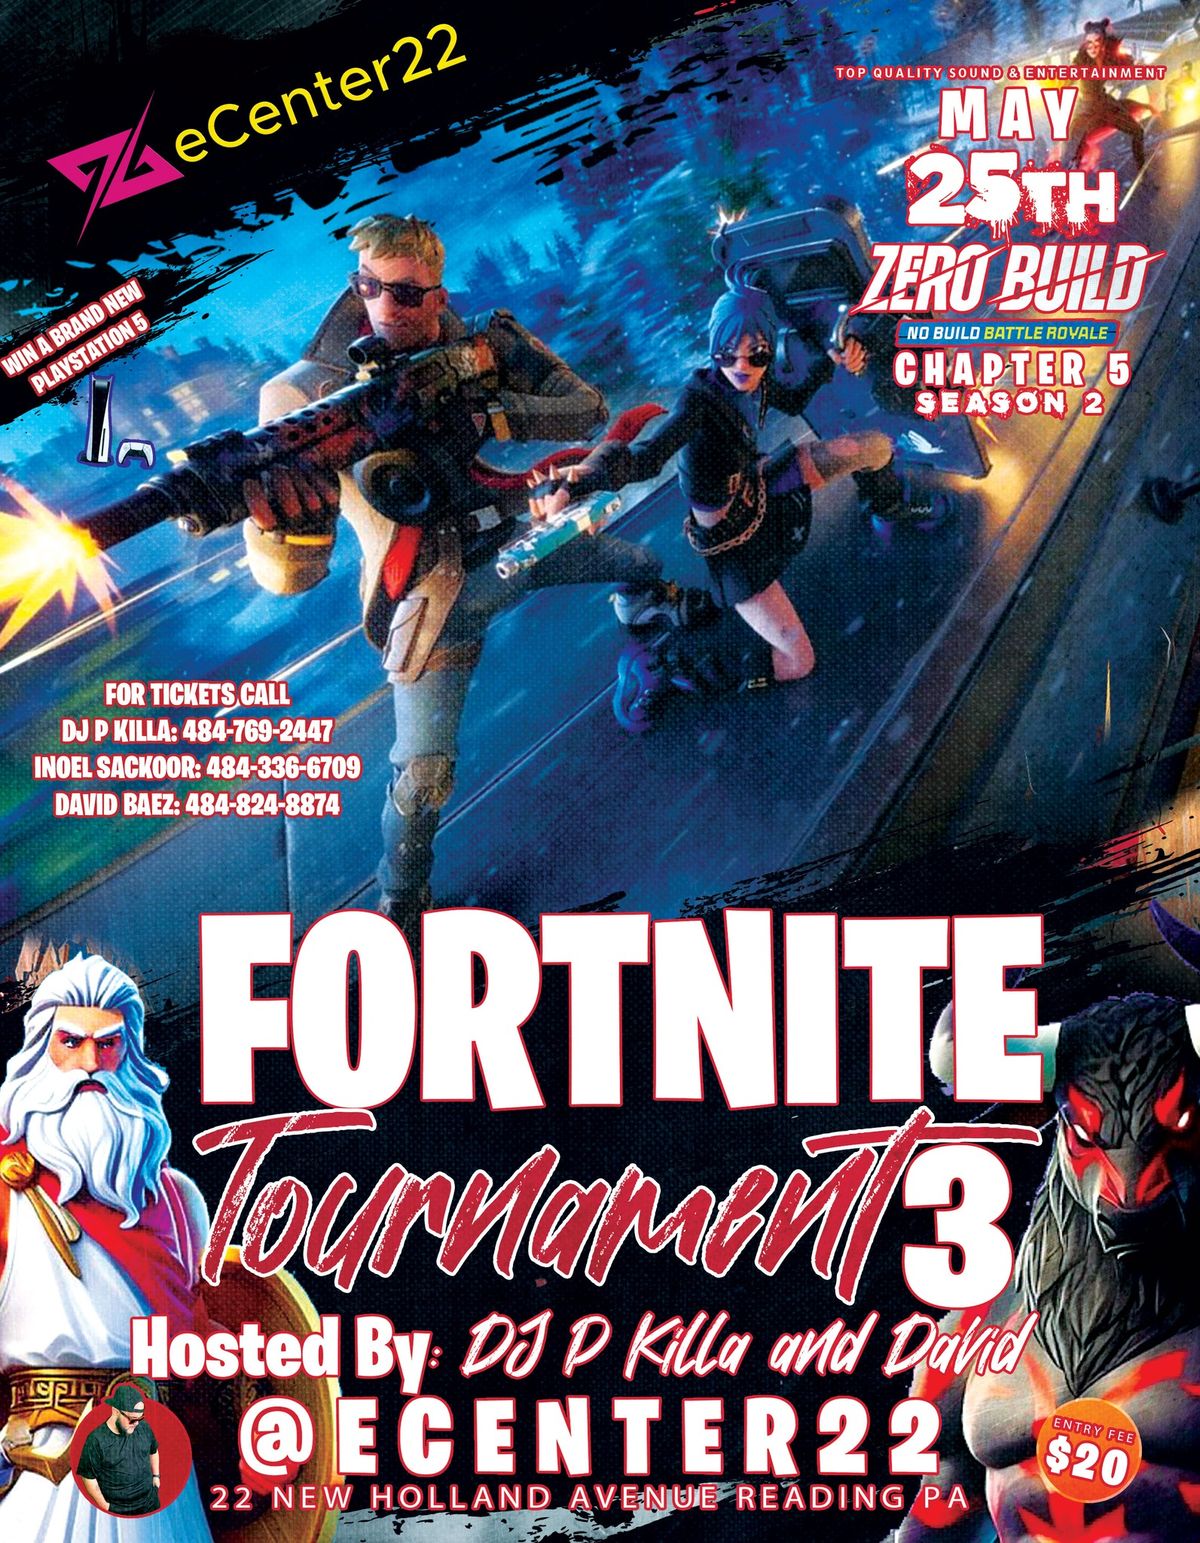 Fortnite Tournament Part. 3 at the eCenter22